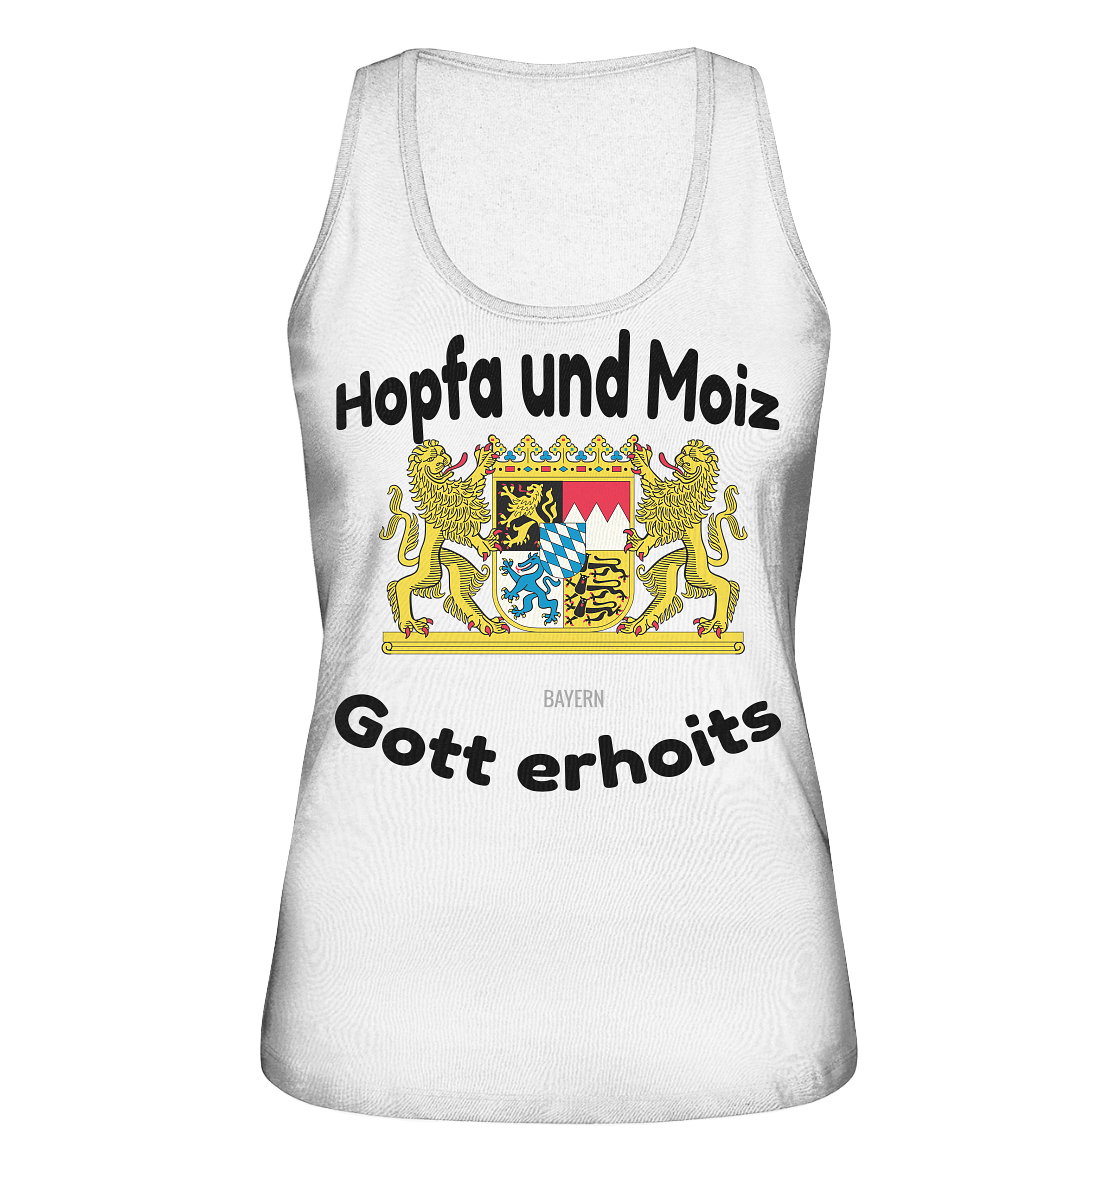 Hopfa and Moiz God erhoits - Ladies Organic Tank Top